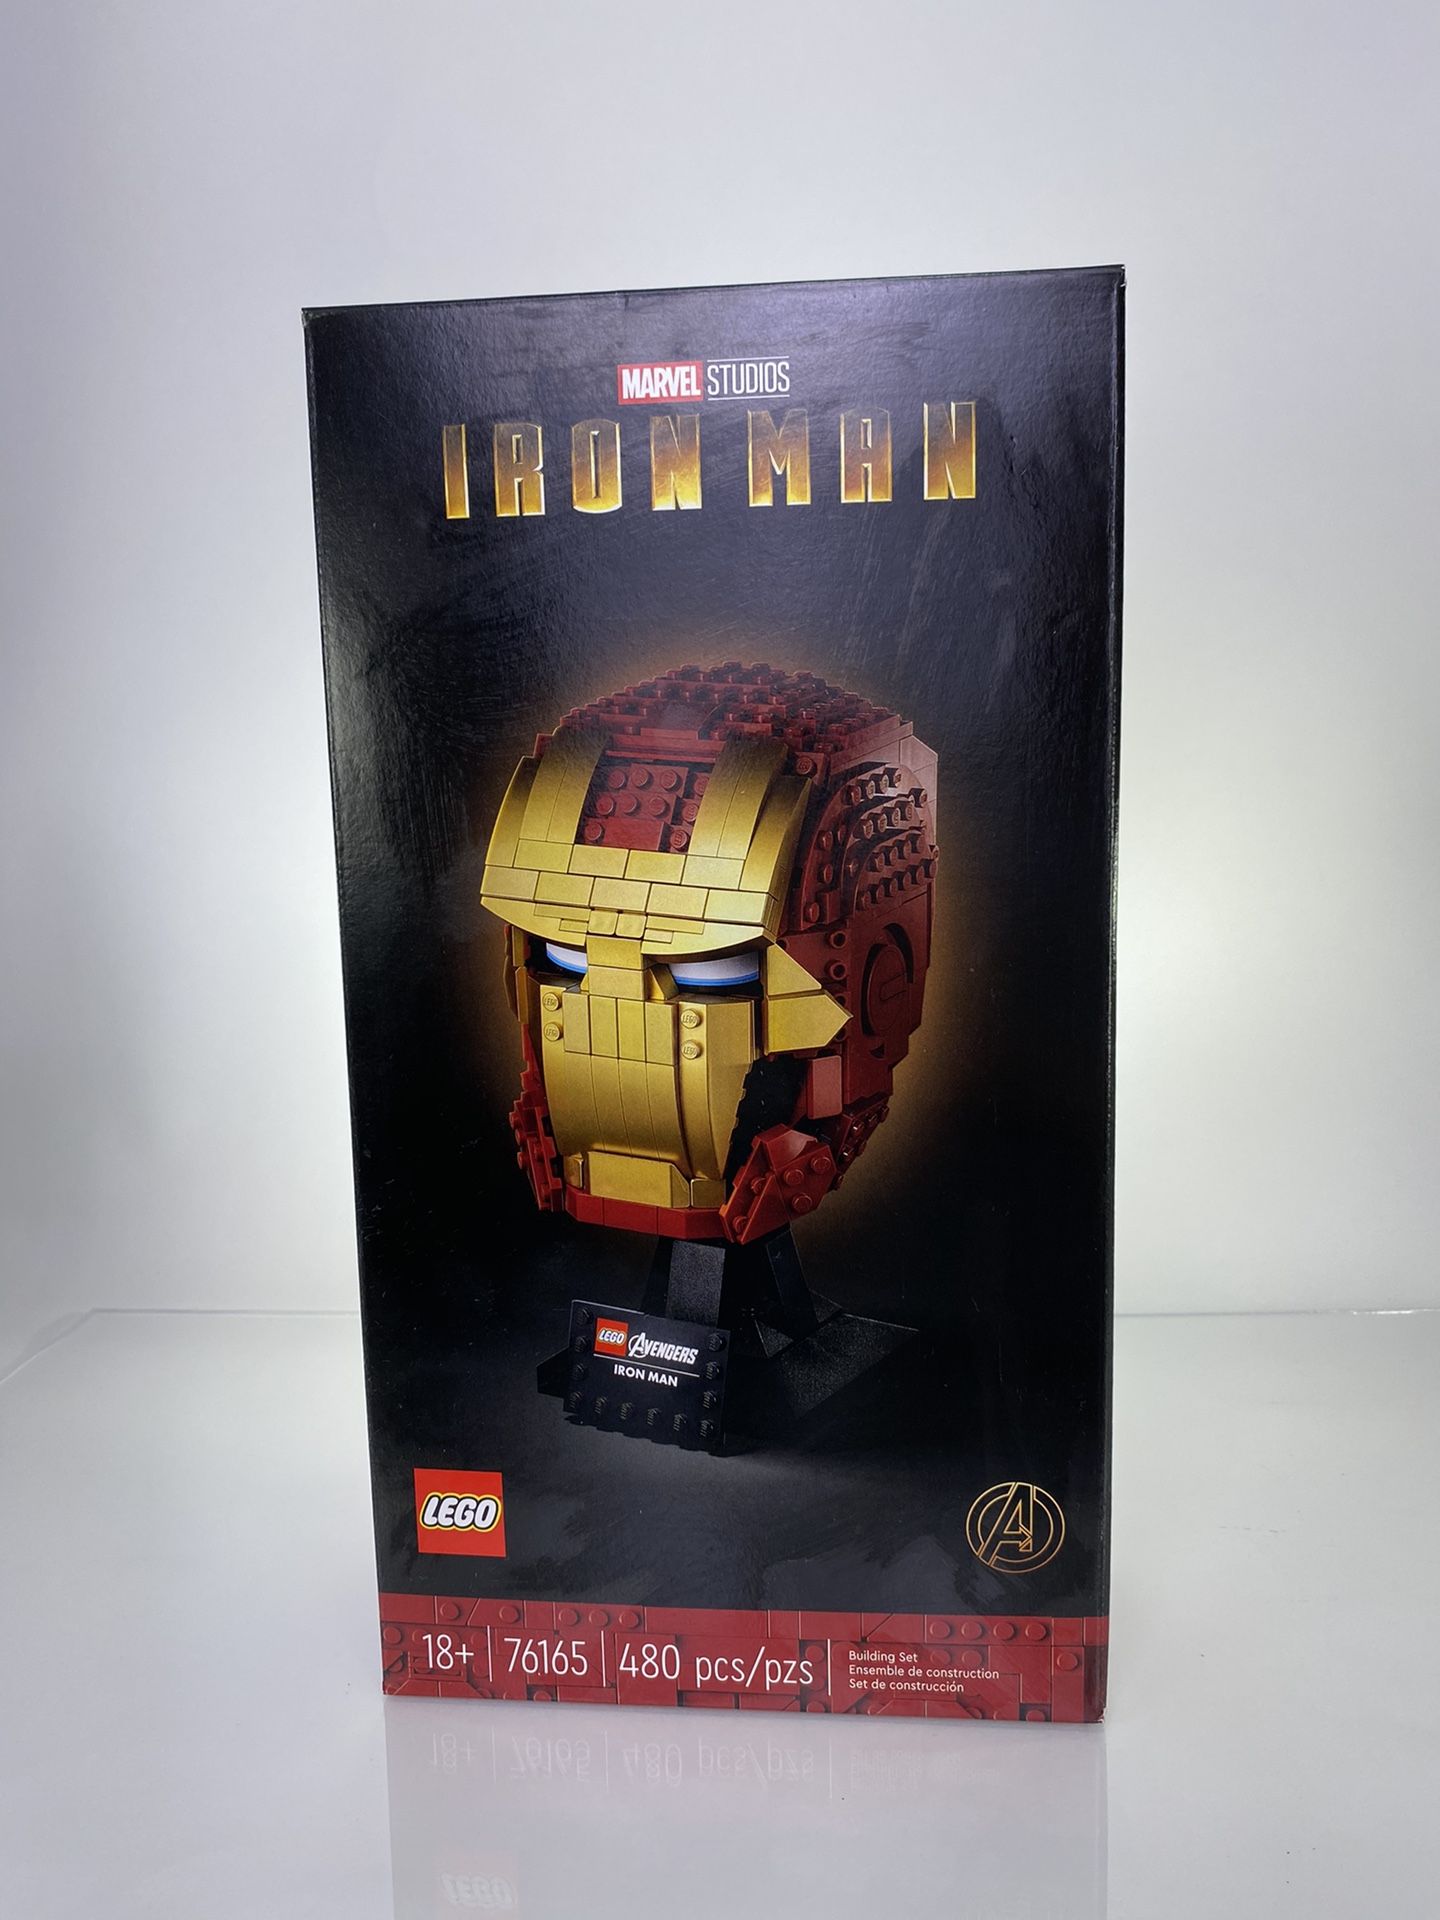 Lego Iron man Avengers helmet Buildings Set 76165 (480 pieces) factory sealed